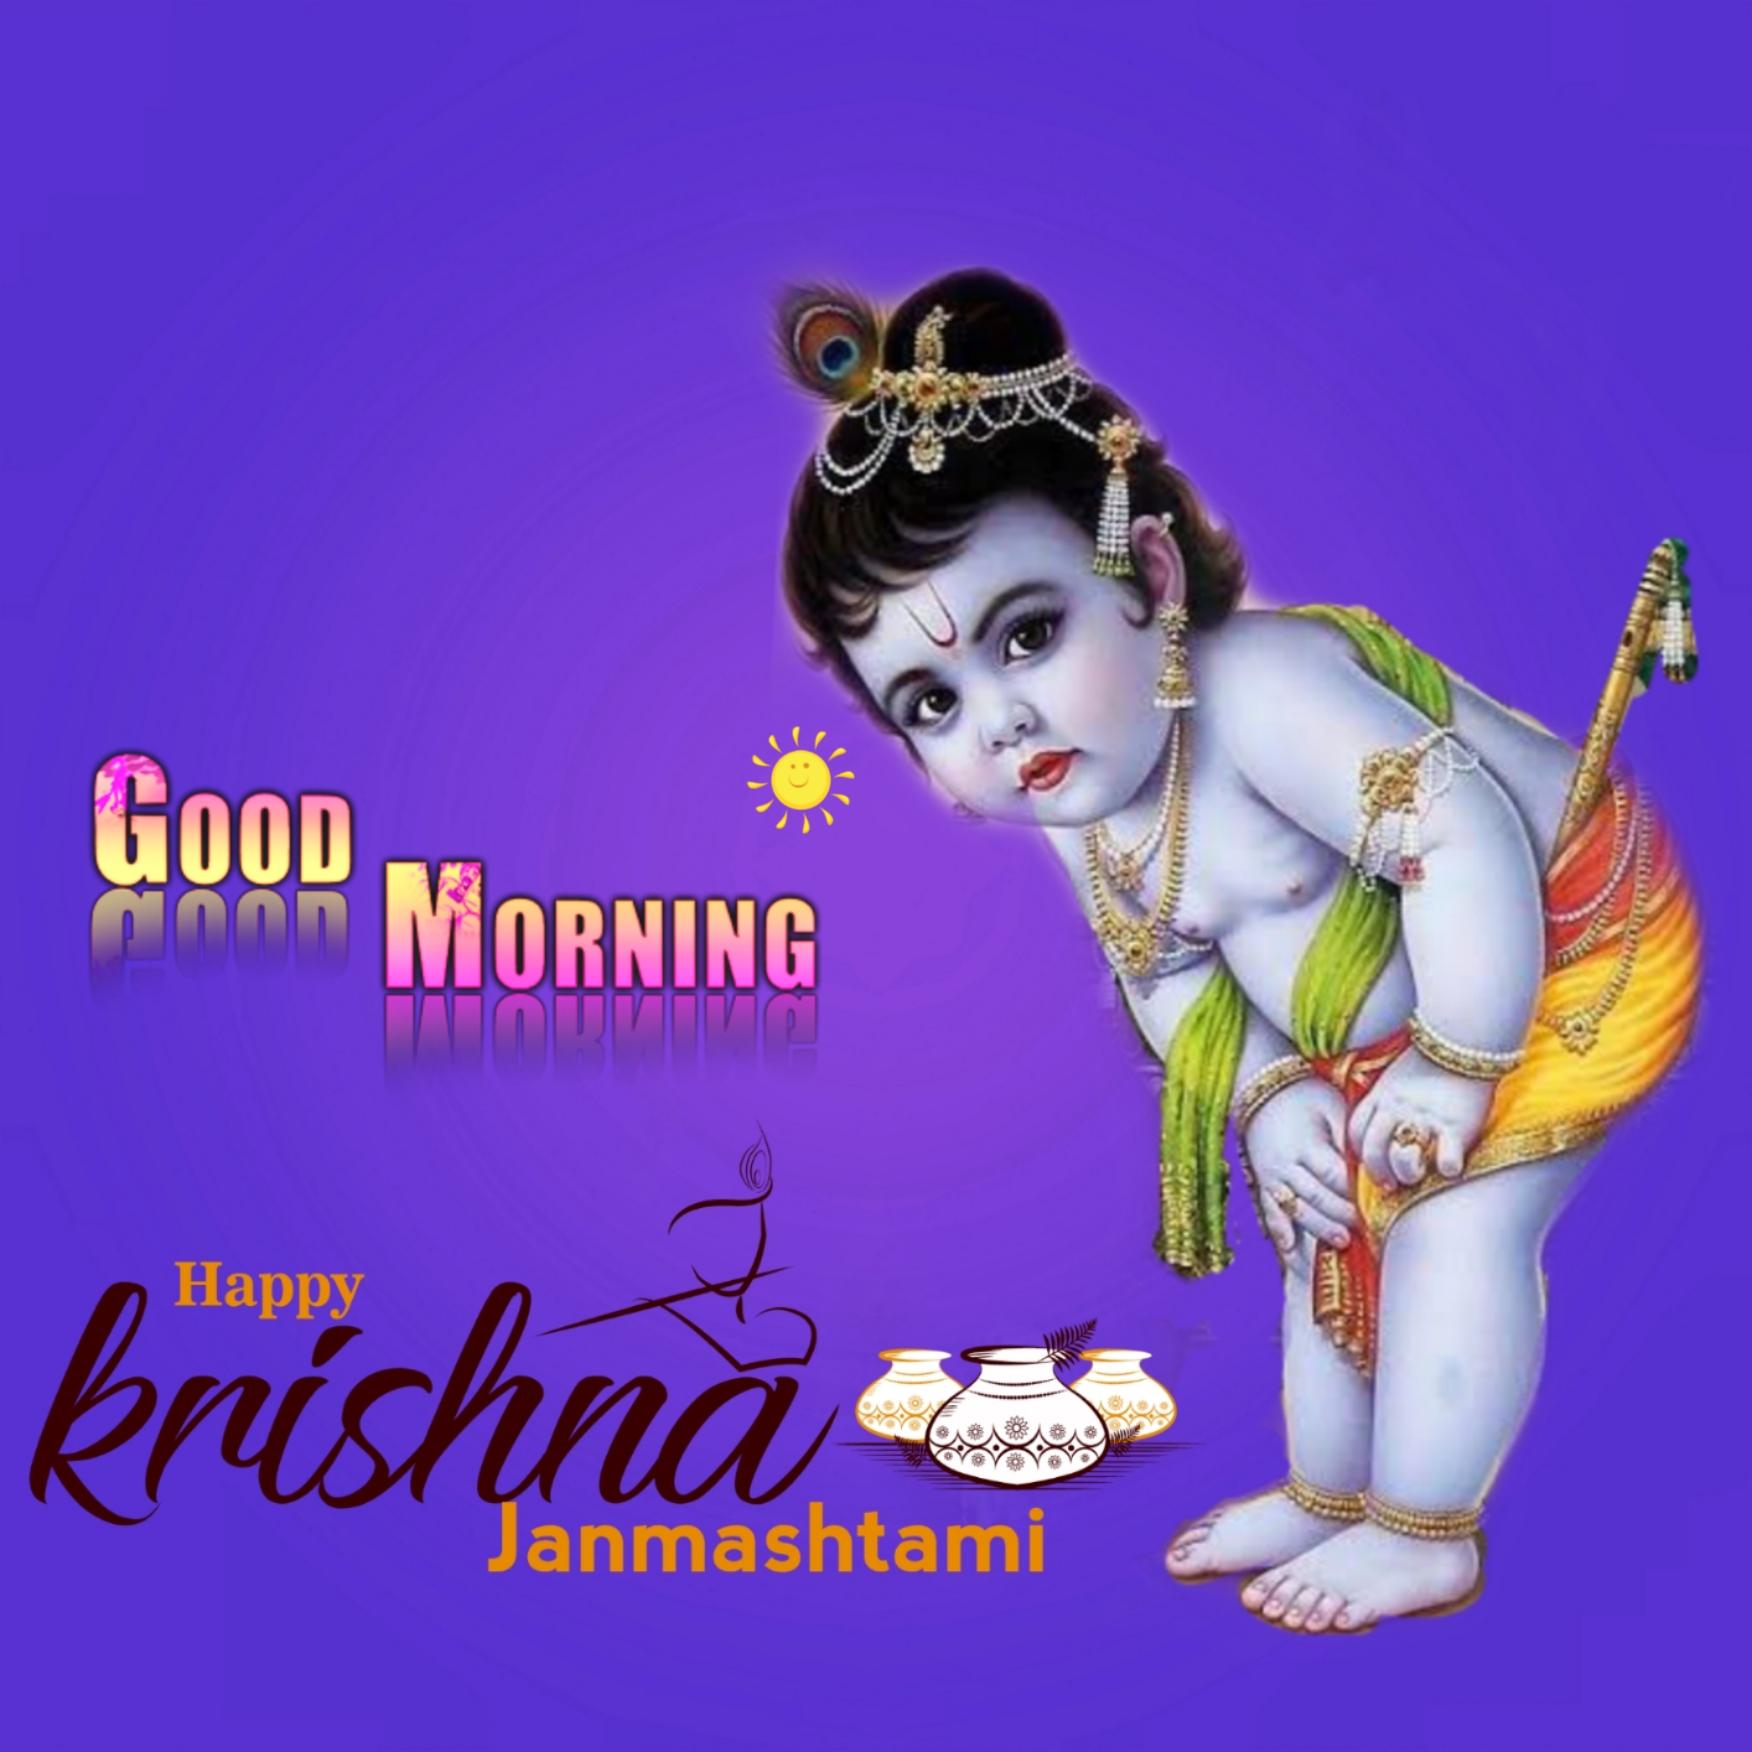 Good Morning Happy Krishna Janmashtami Images